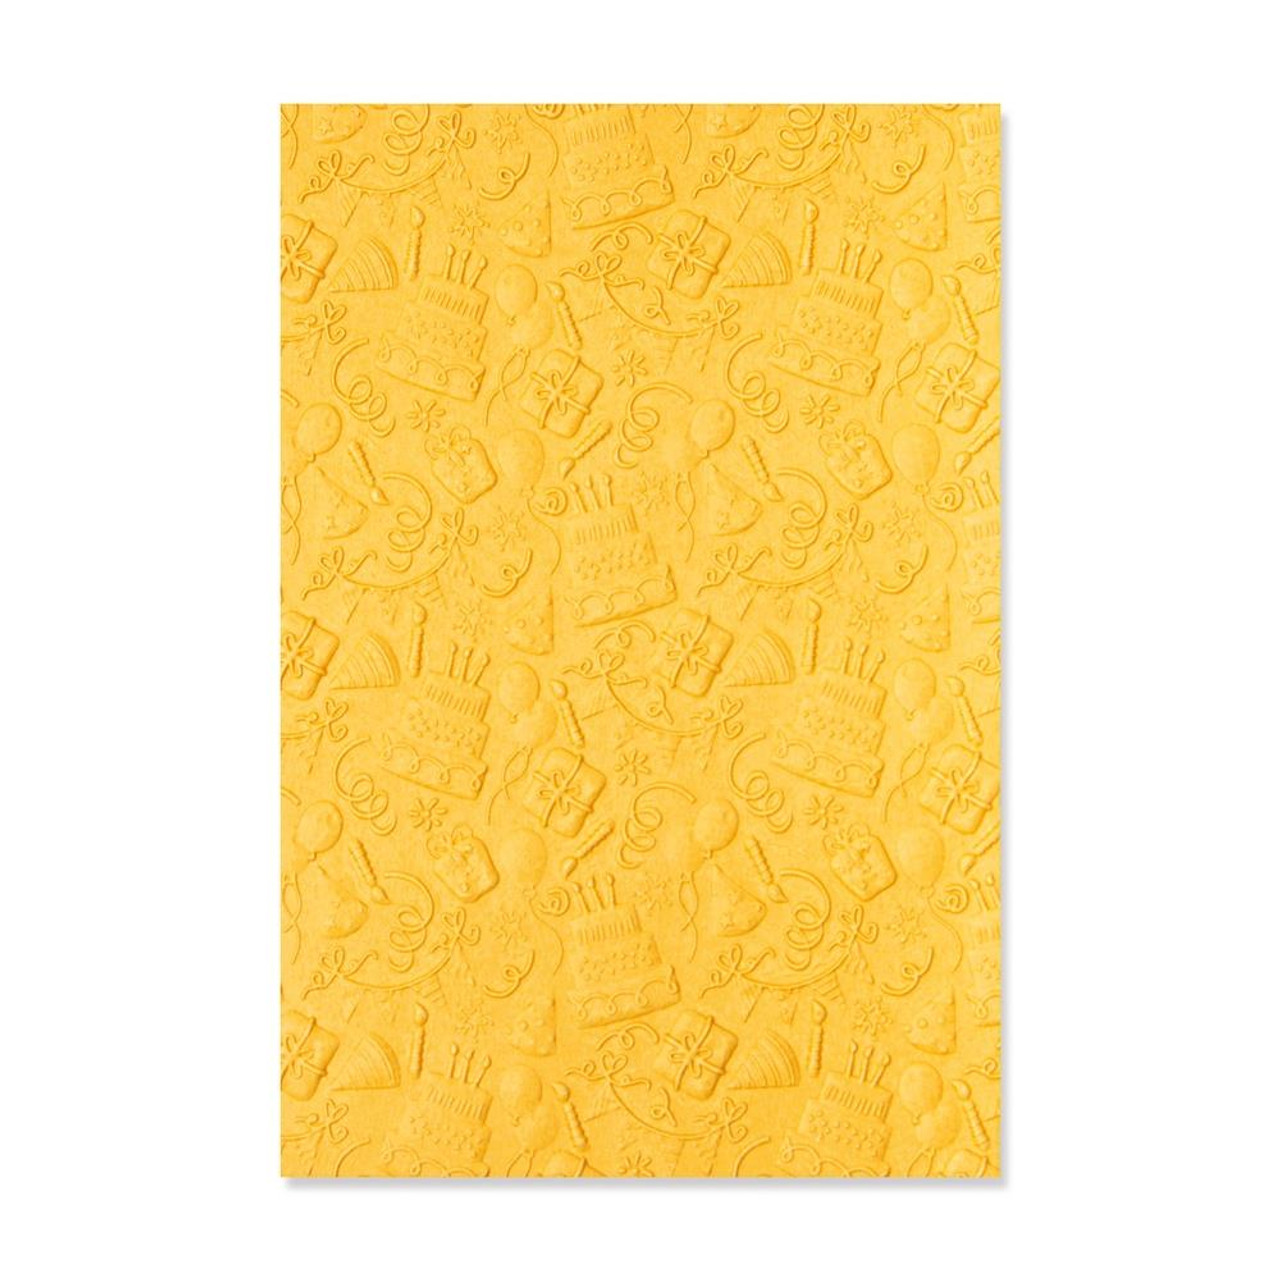 Sizzix - 3-D Textured Impressions Embossing Folder - Organic Petals by Kath Breen